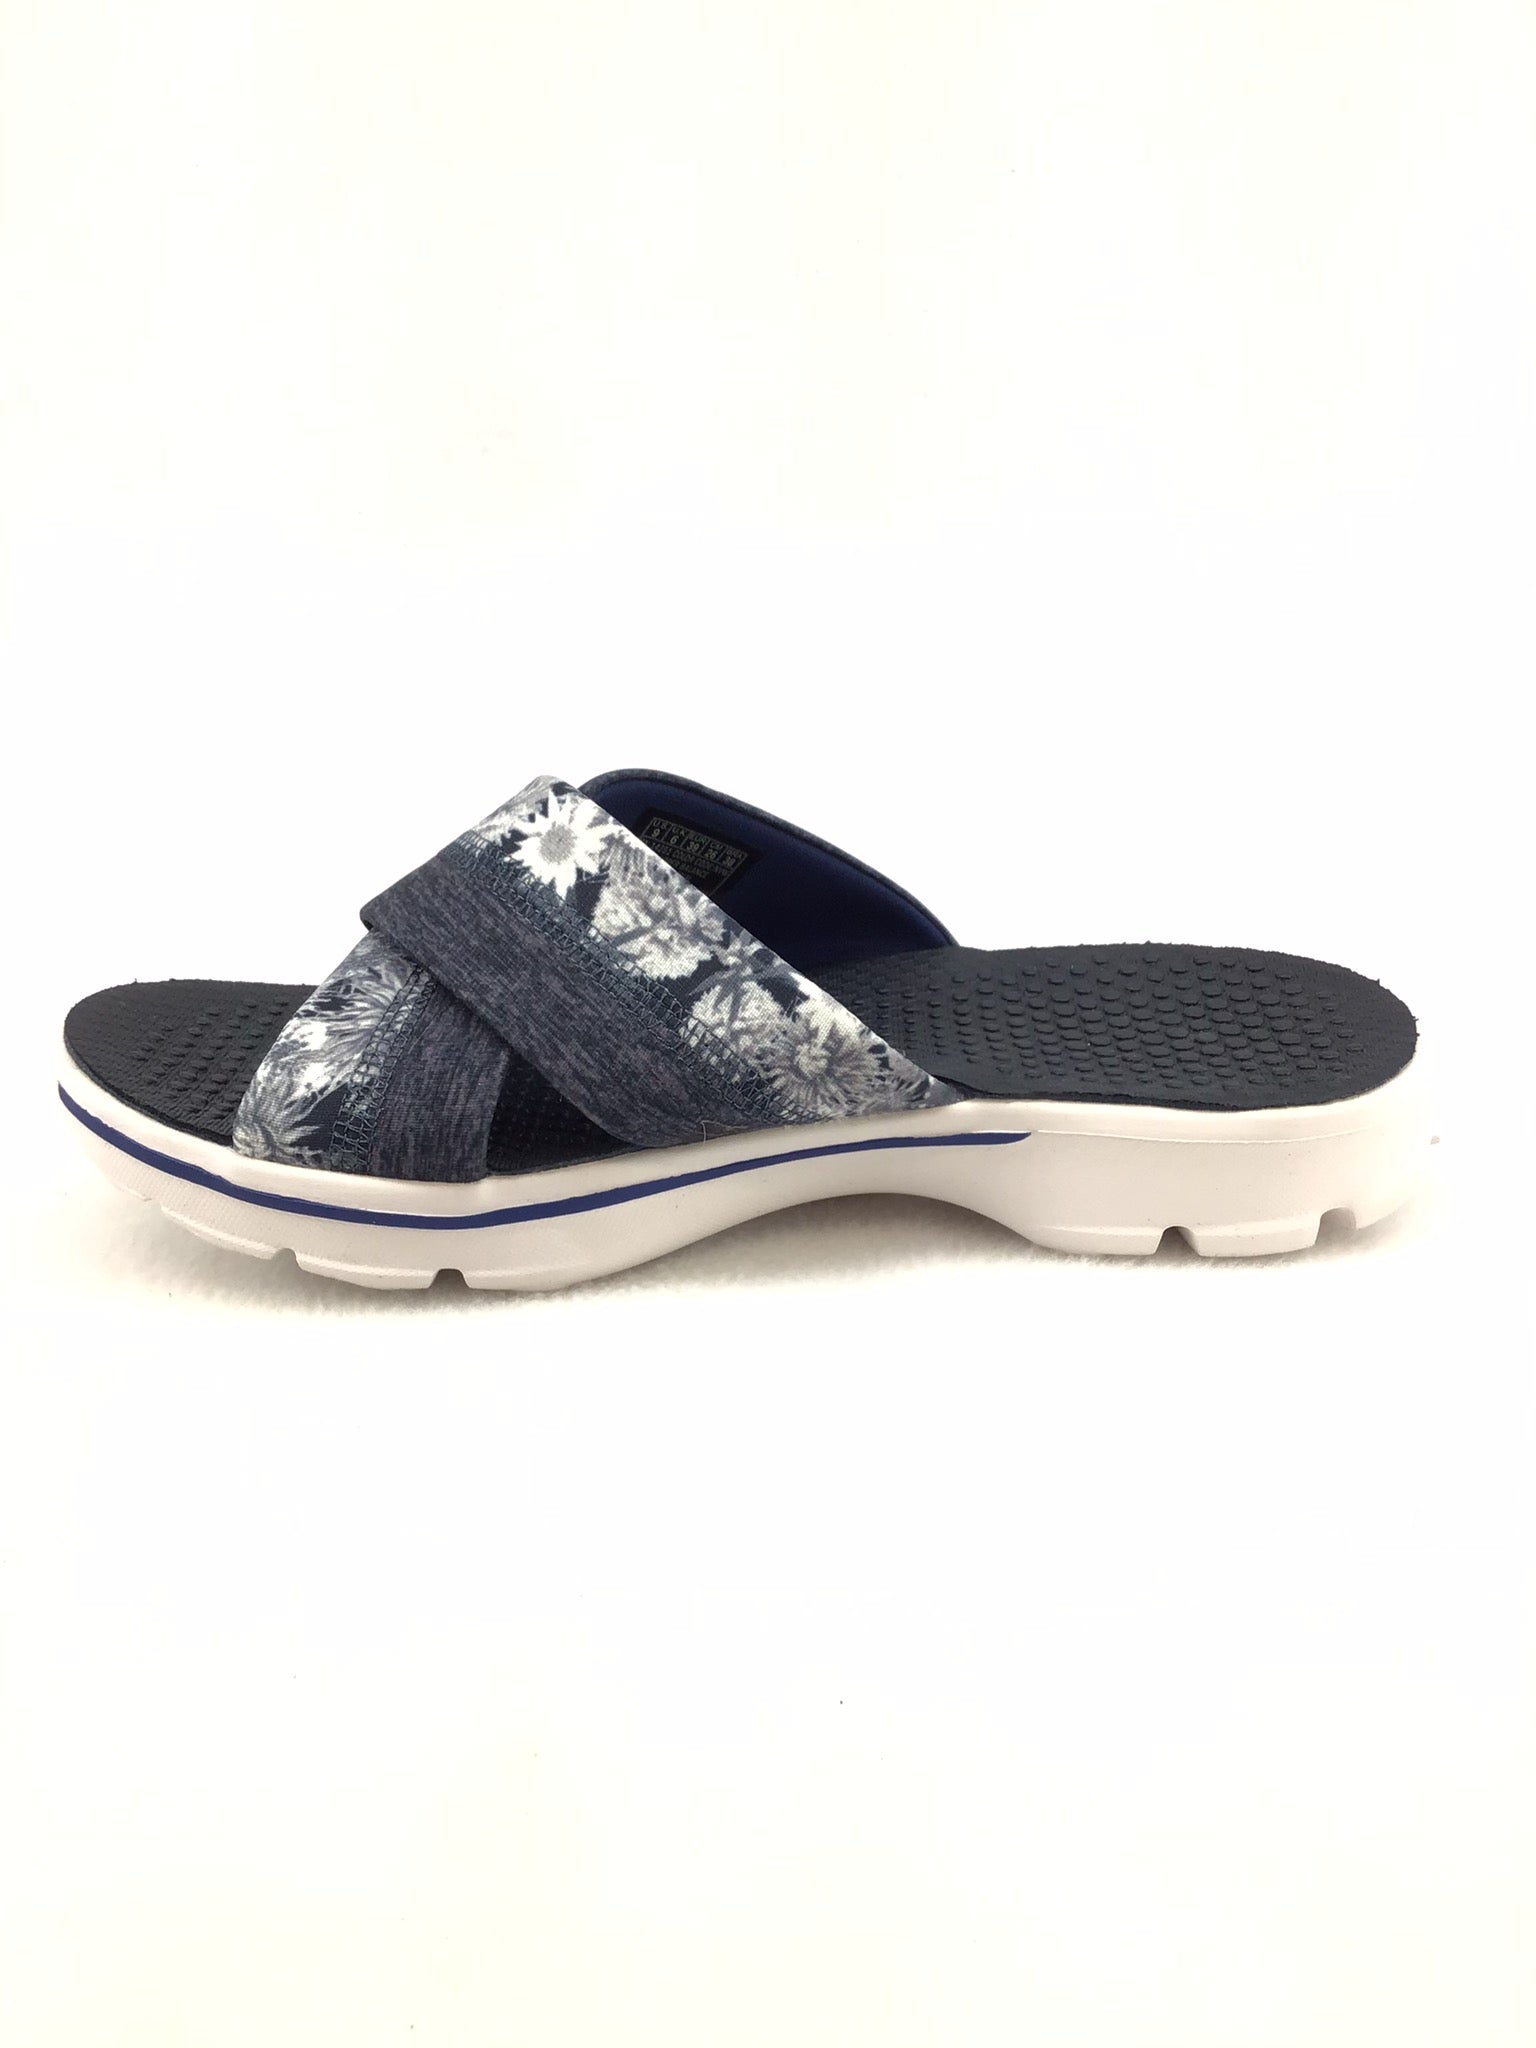 Skechers goga mat sandals sz 8 new - Sandals & Flip Flops - Central City,  Nebraska, Facebook Marketplace